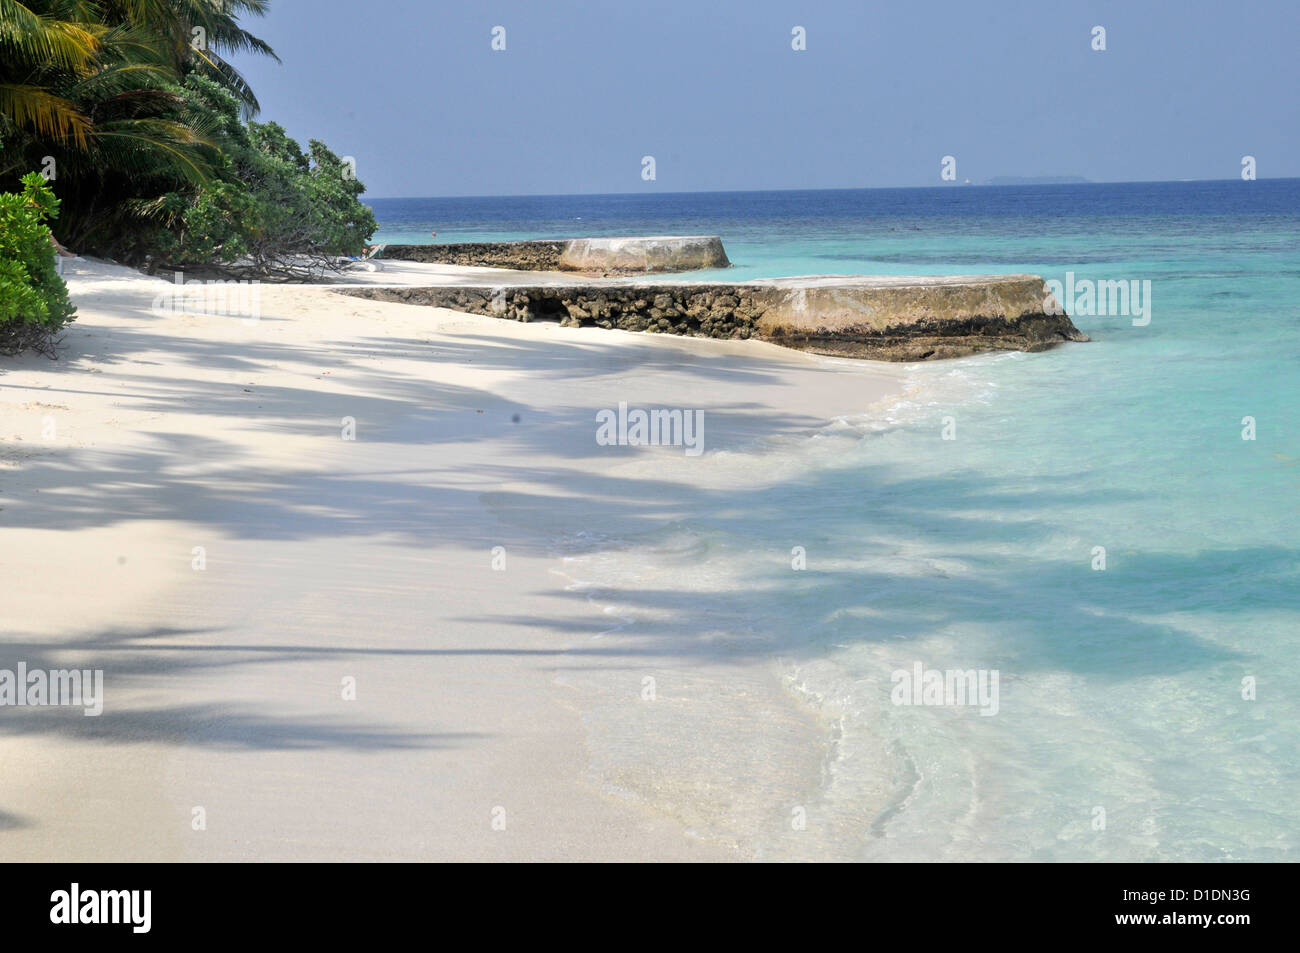 jetty wave breakers on a tropical maldive island beach resort Stock Photo